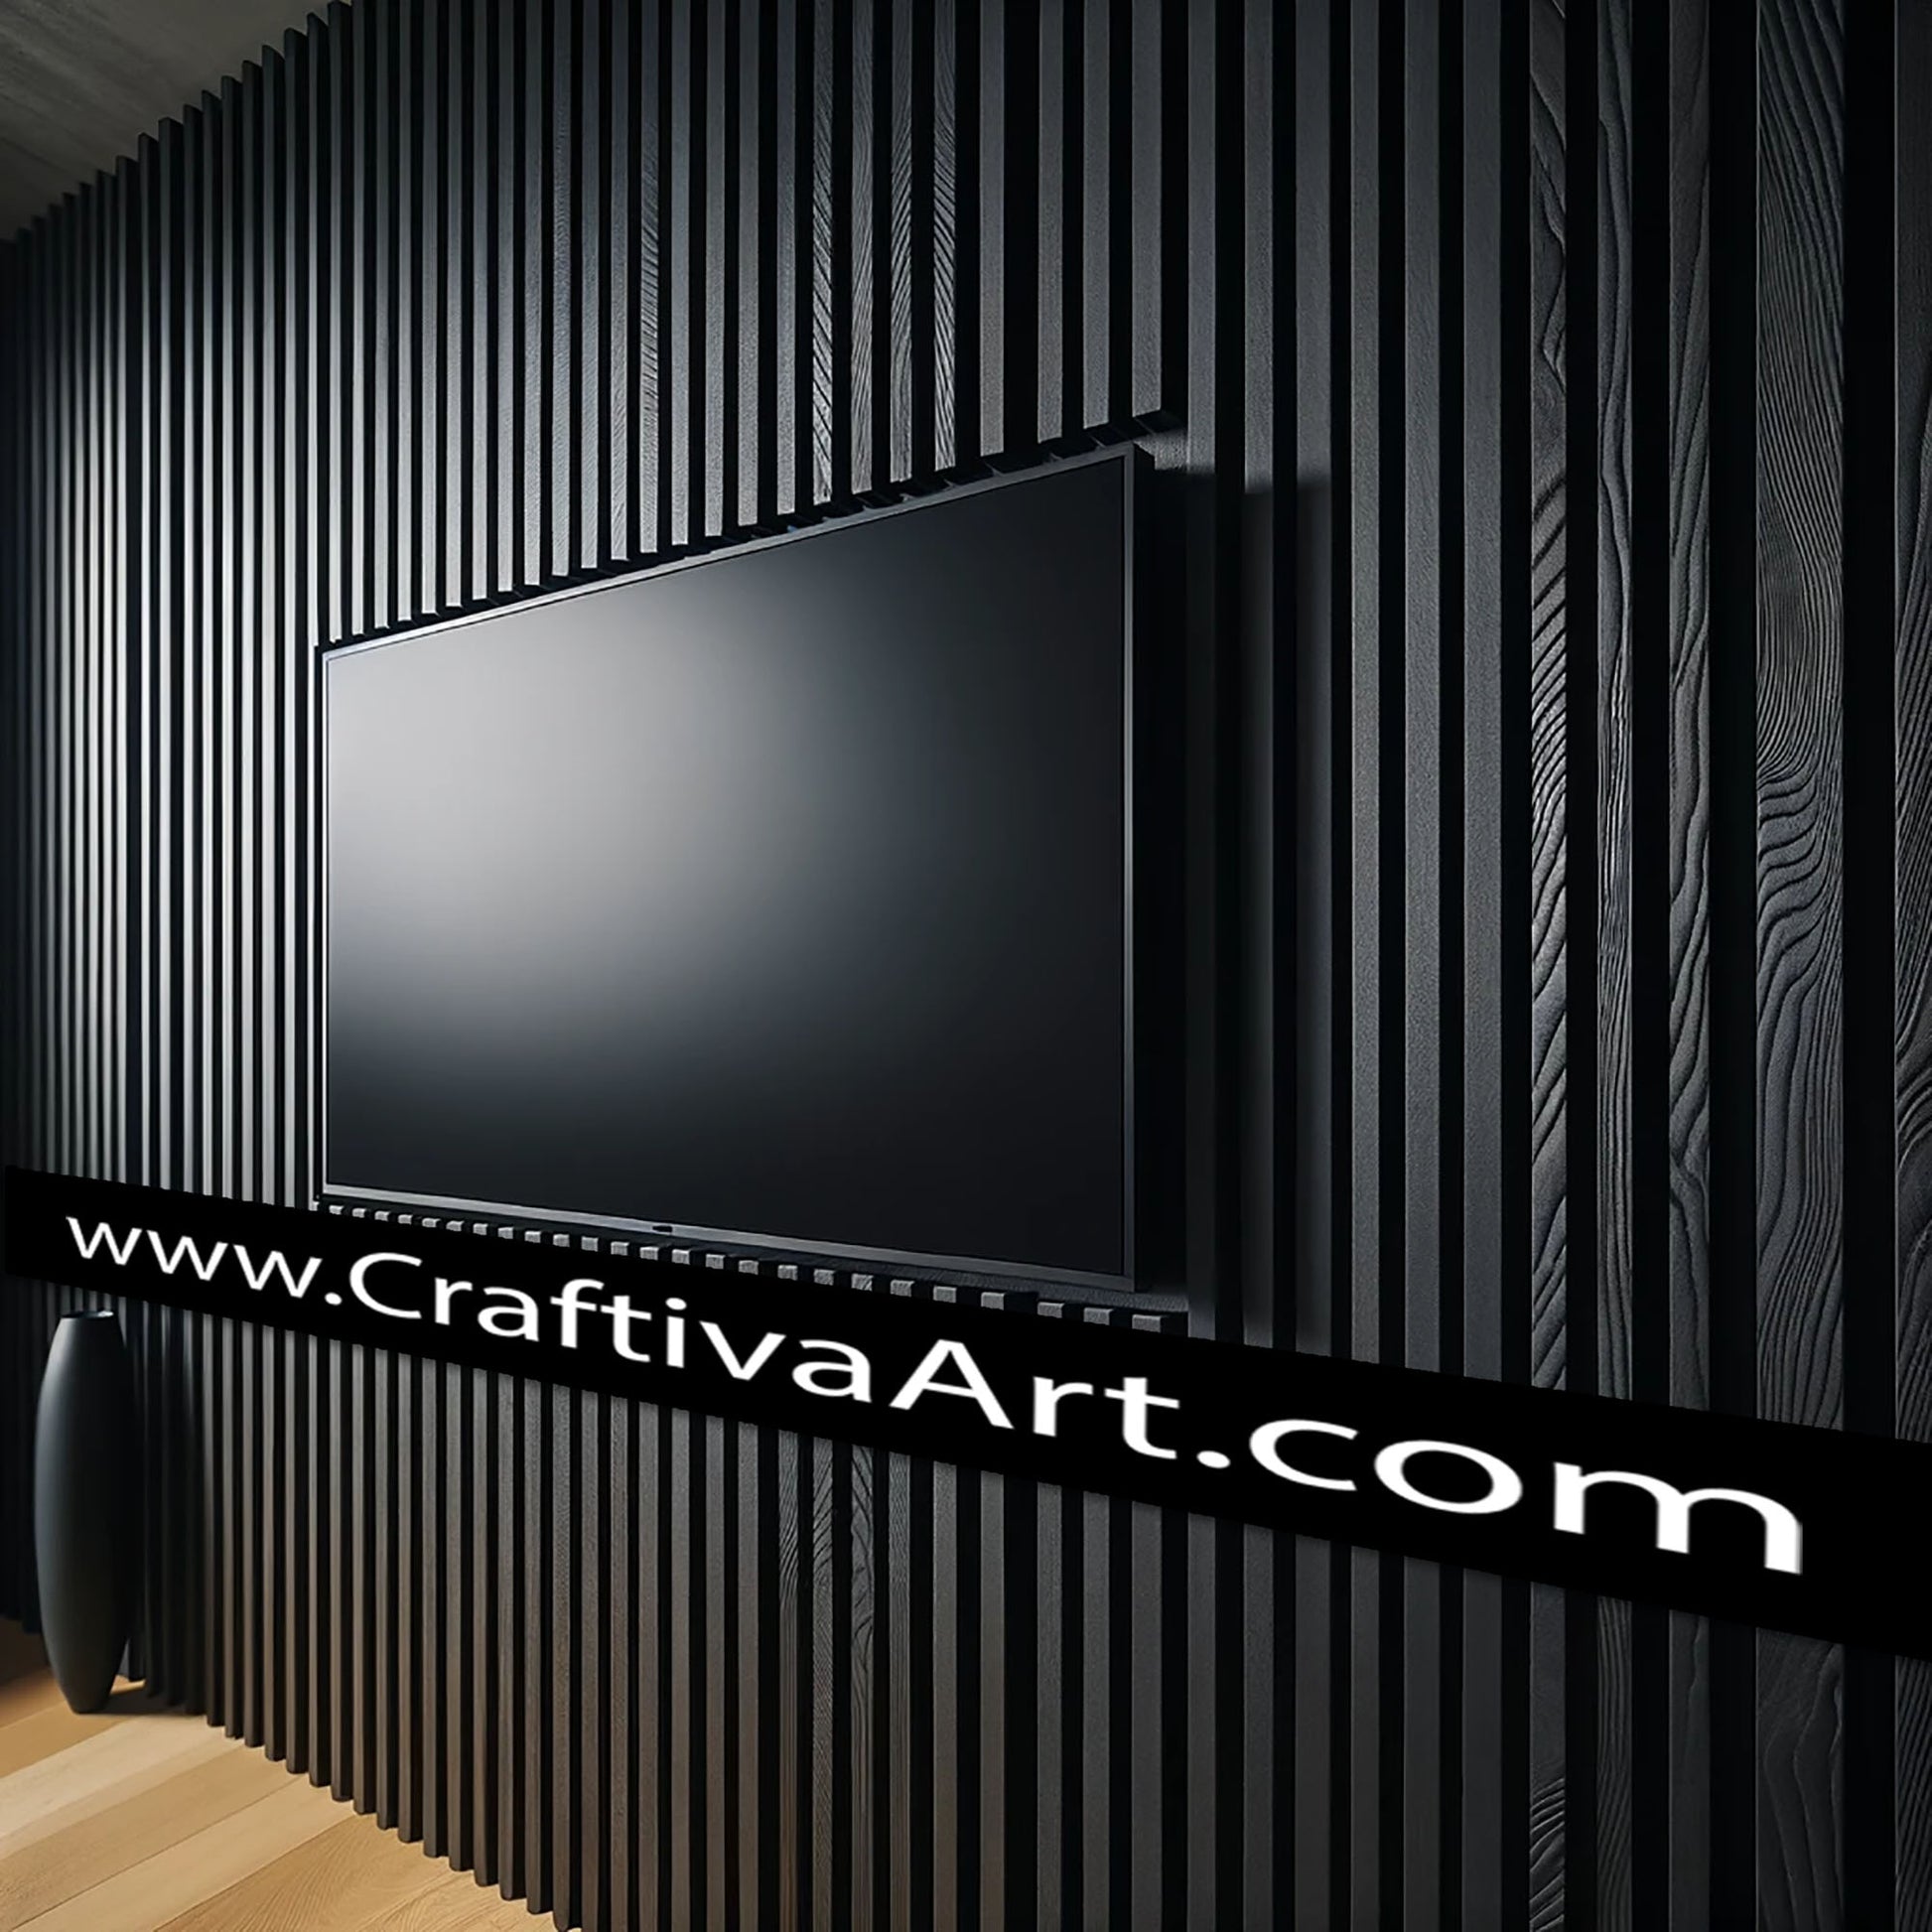 Panel decorativo con listones de madera WL 400×400 negro – negro mate -  Marbet Design